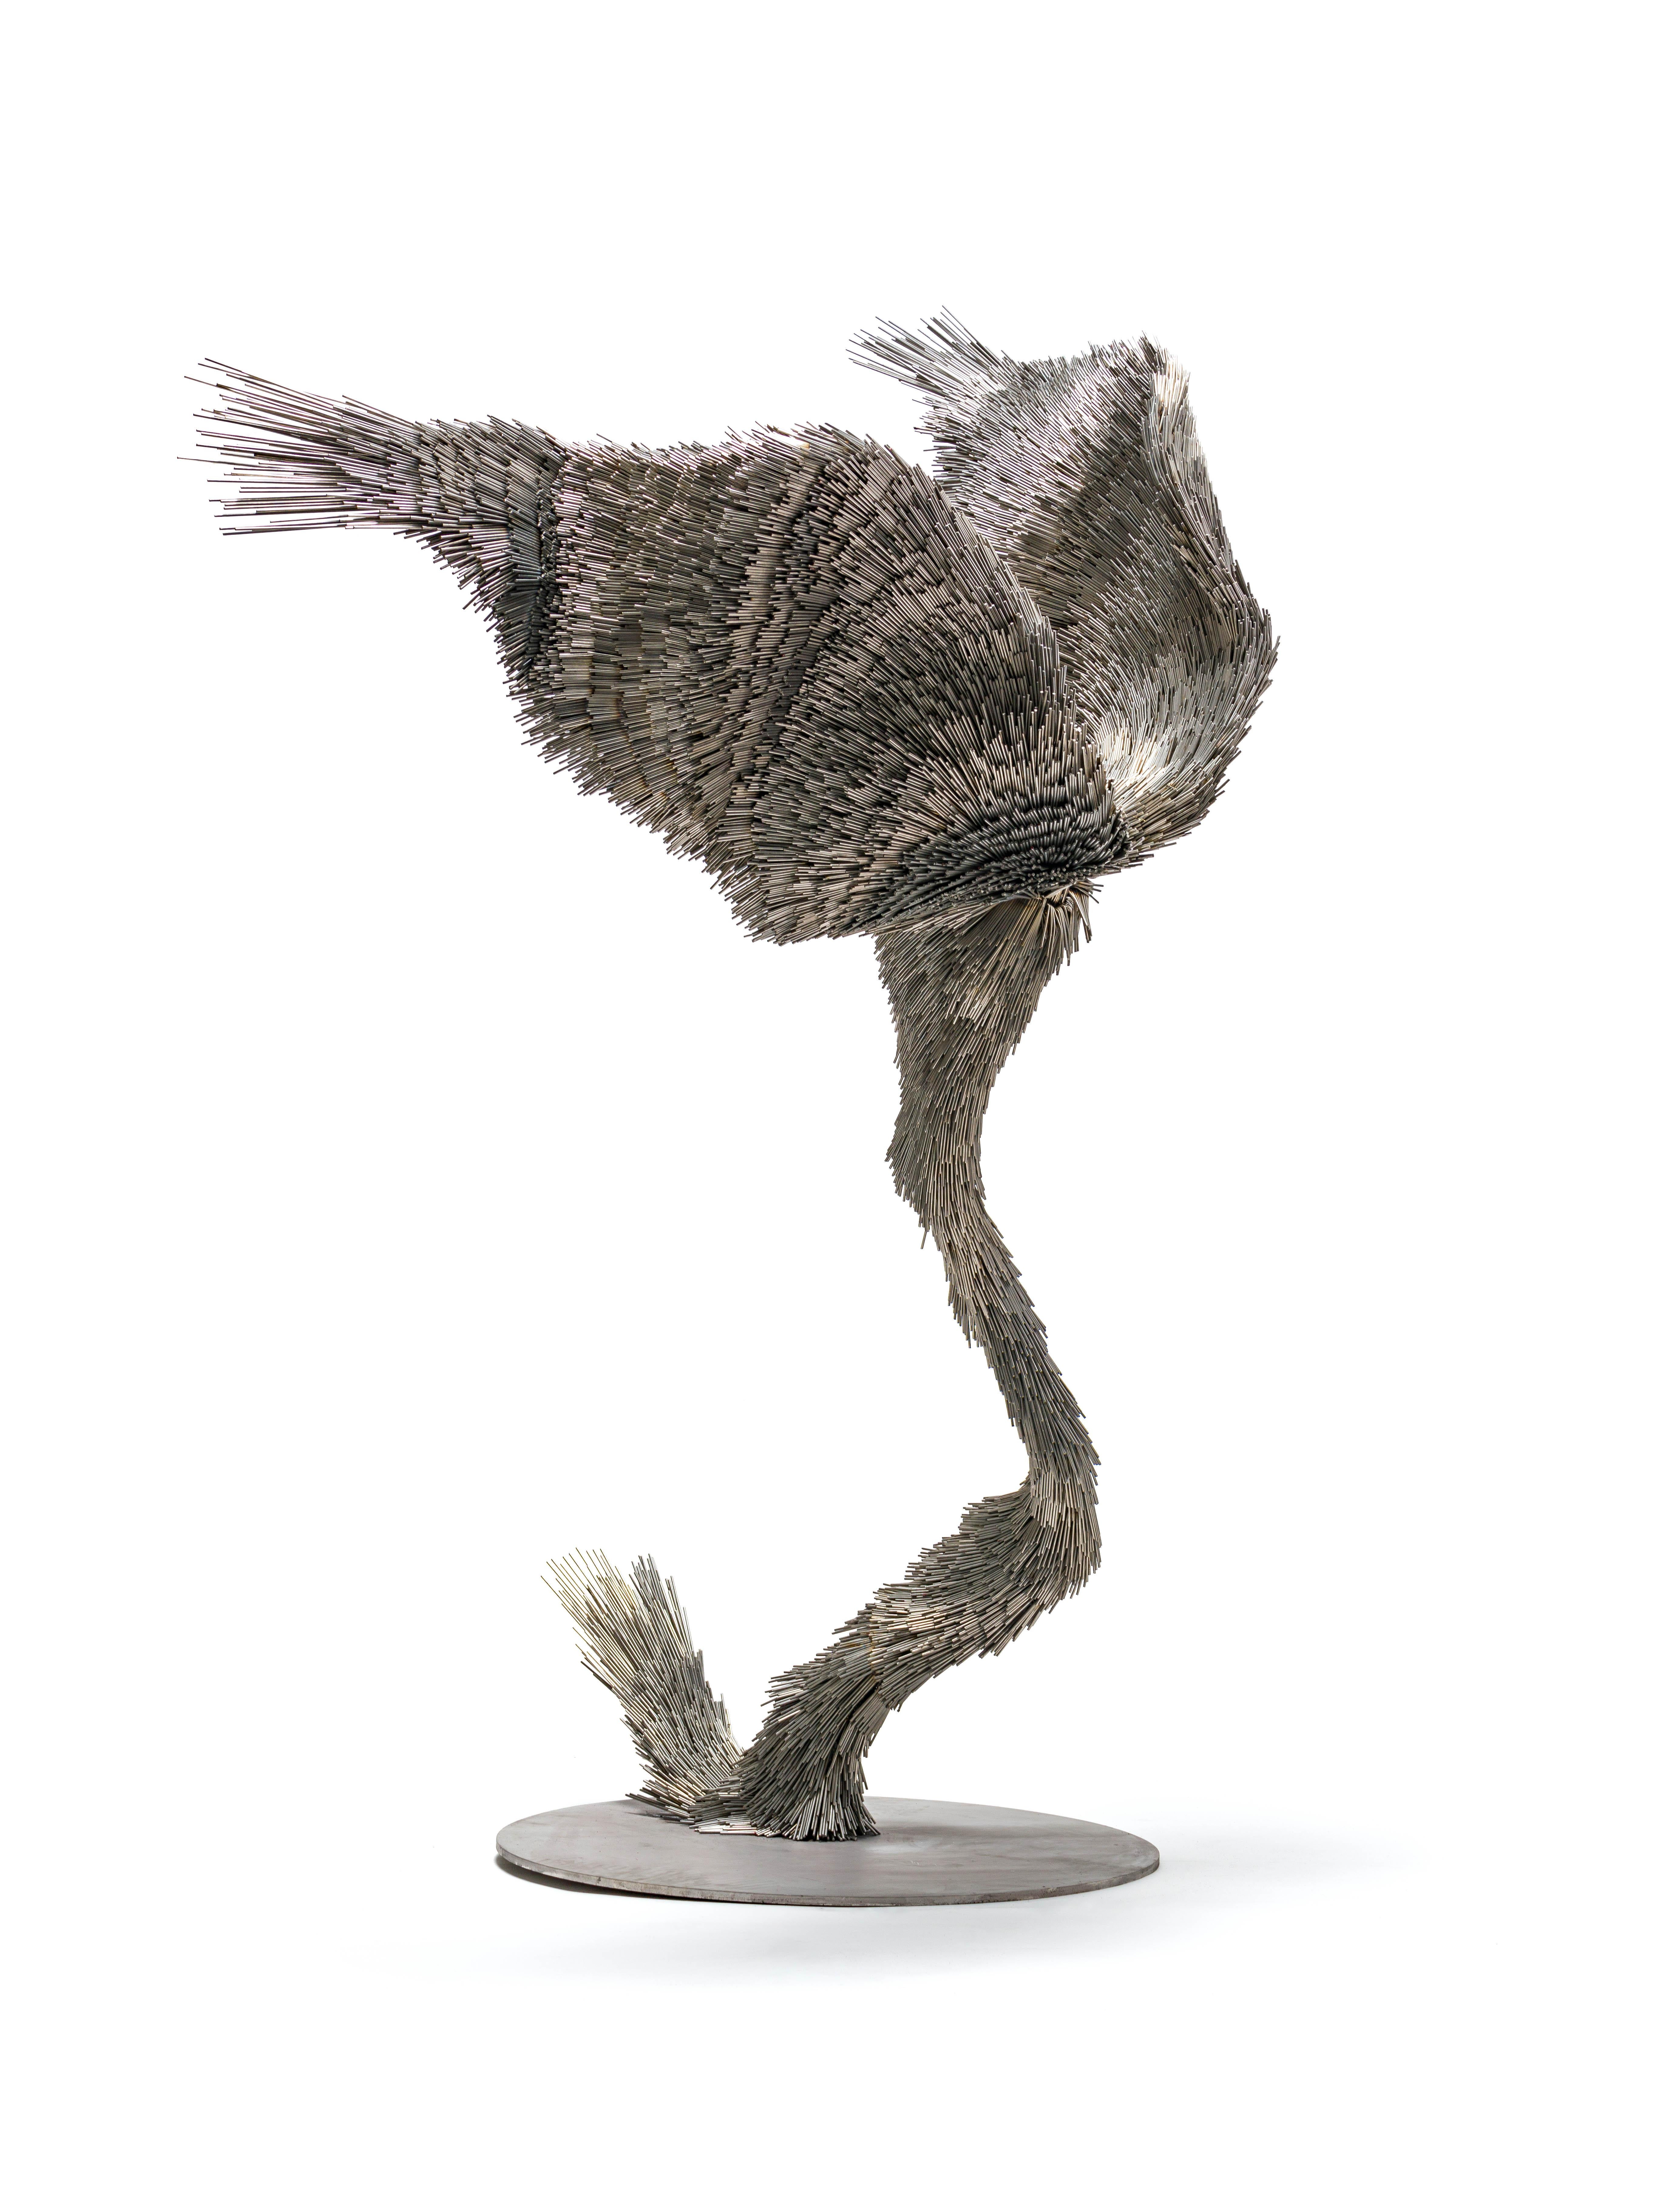 Jake Michael Singer Figurative Sculpture - Seolfor Murmur, Steel contemporary bird sculpture in steel